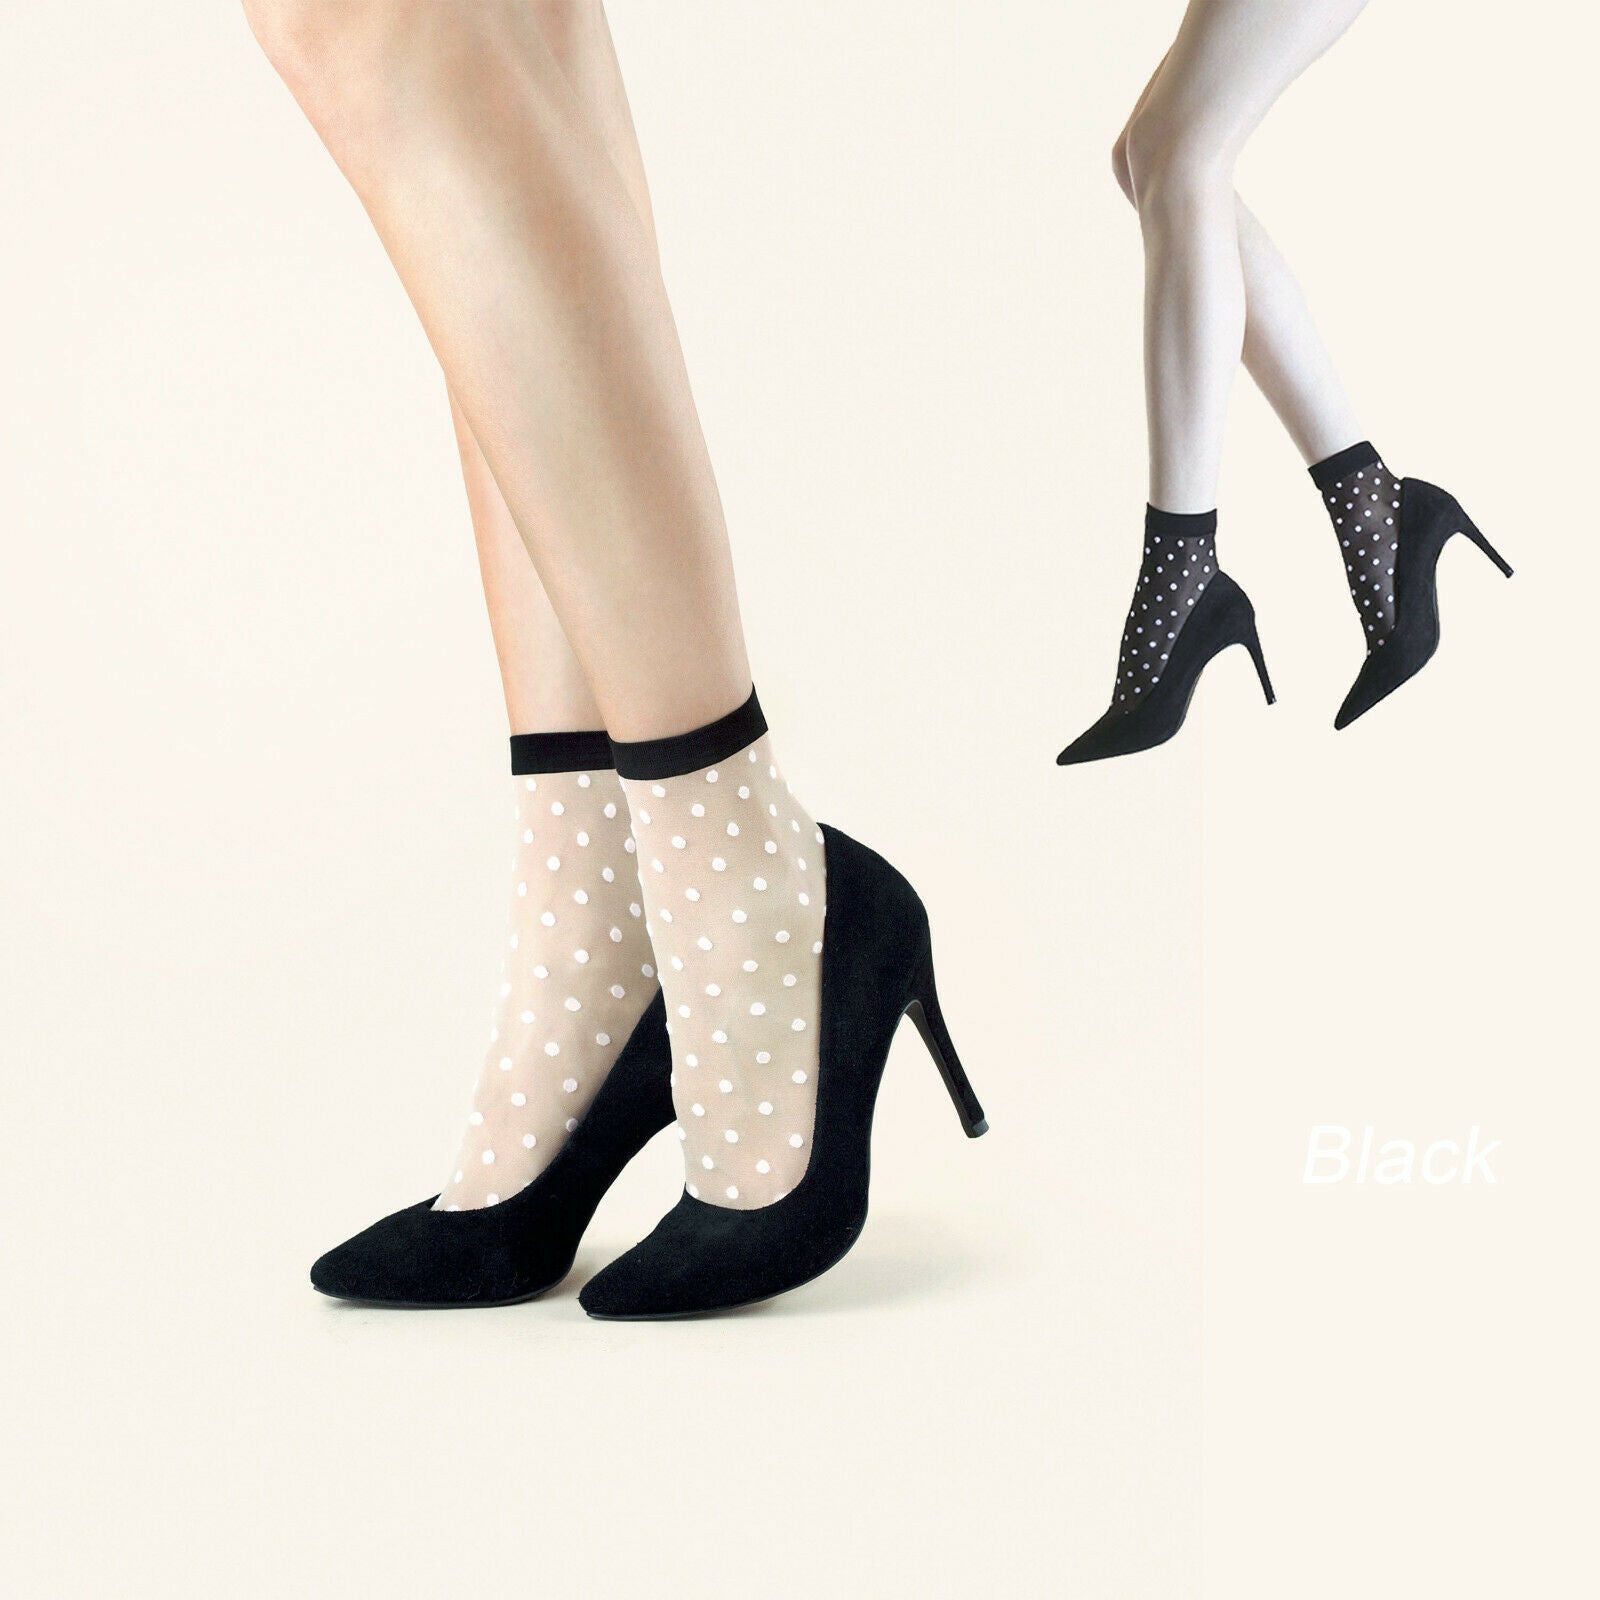 Fiore Bubble Gum 20D Ankle Socks - Sheer Polka Dot Pattern - One Size ...